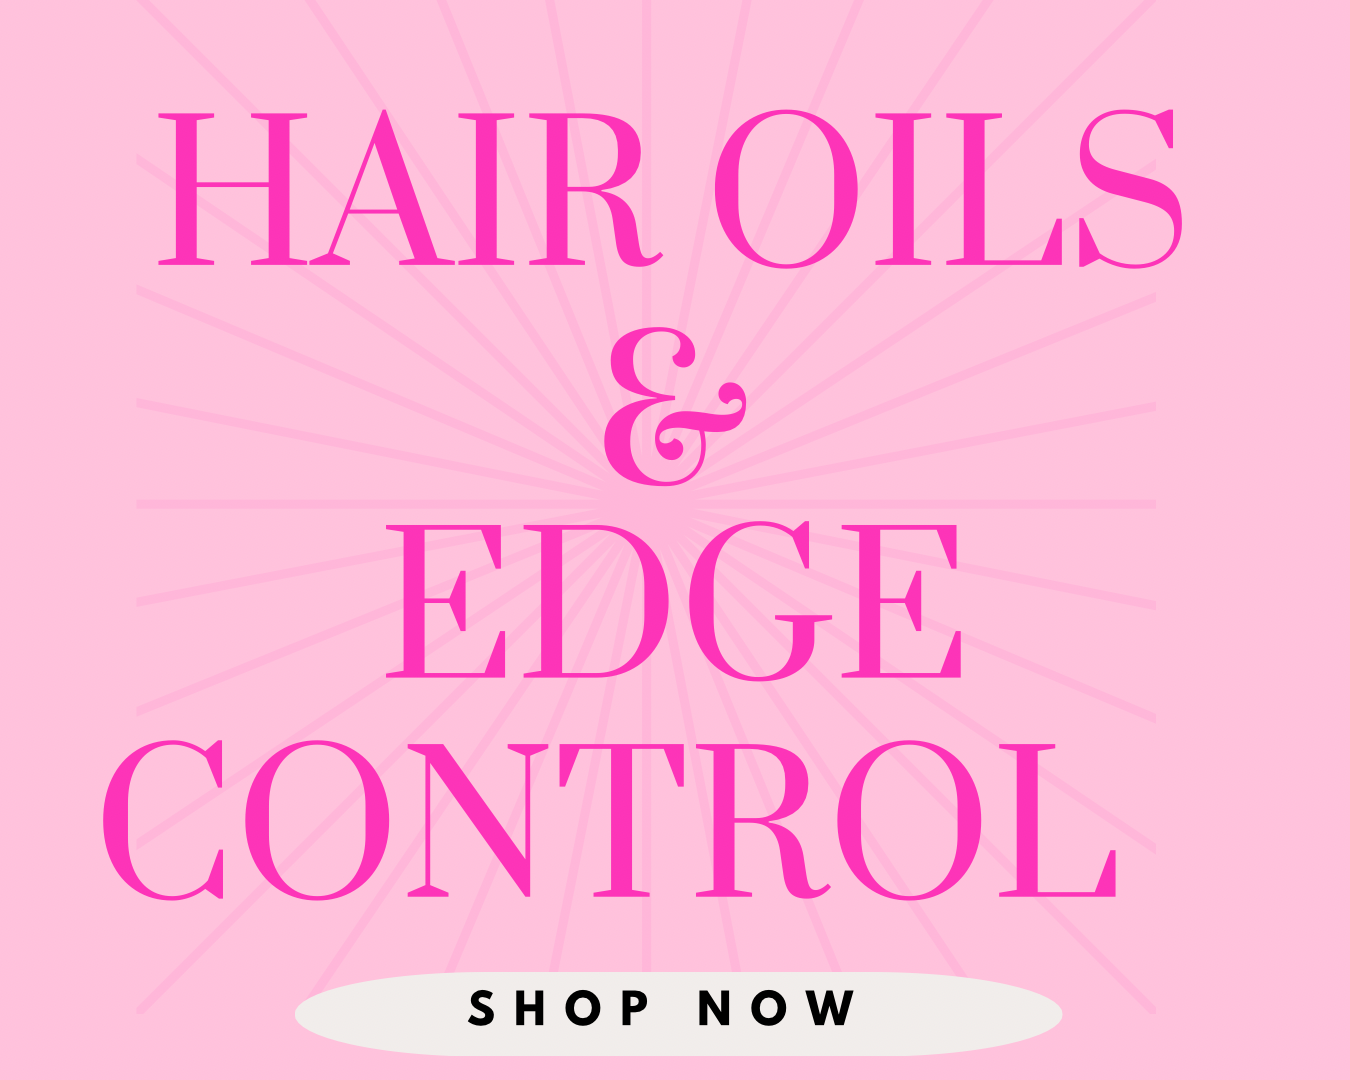 HAIR OILS AND EDGE CONTROL